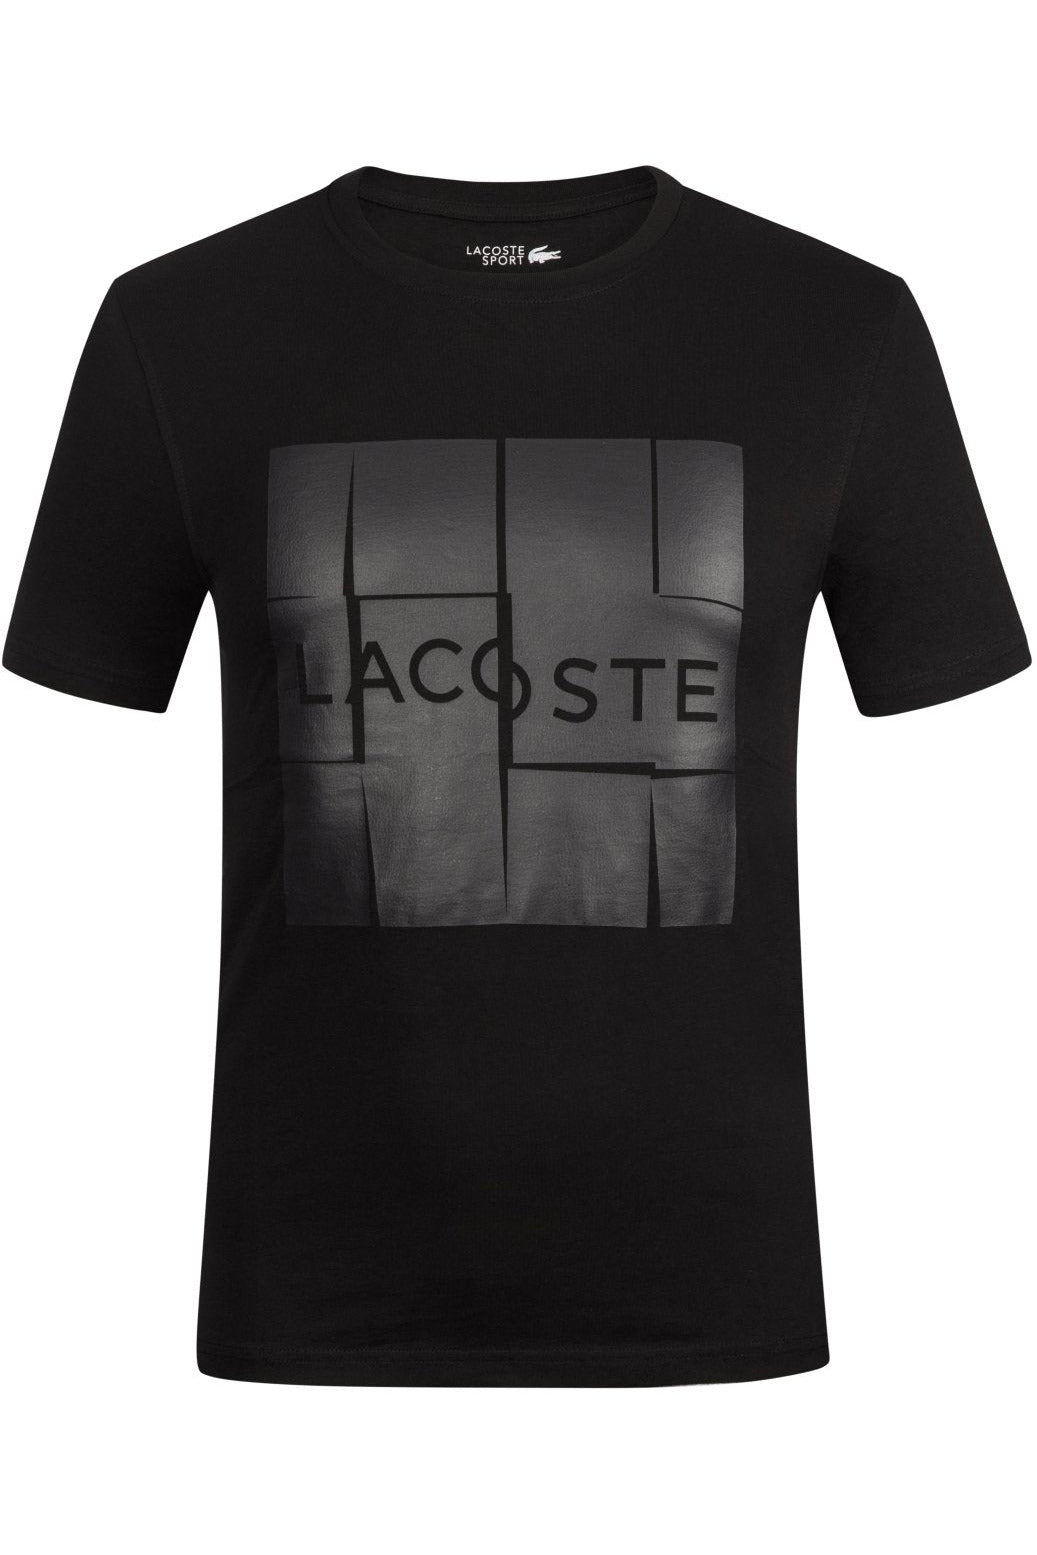 Lacoste Black T Shirt - Giltenergy